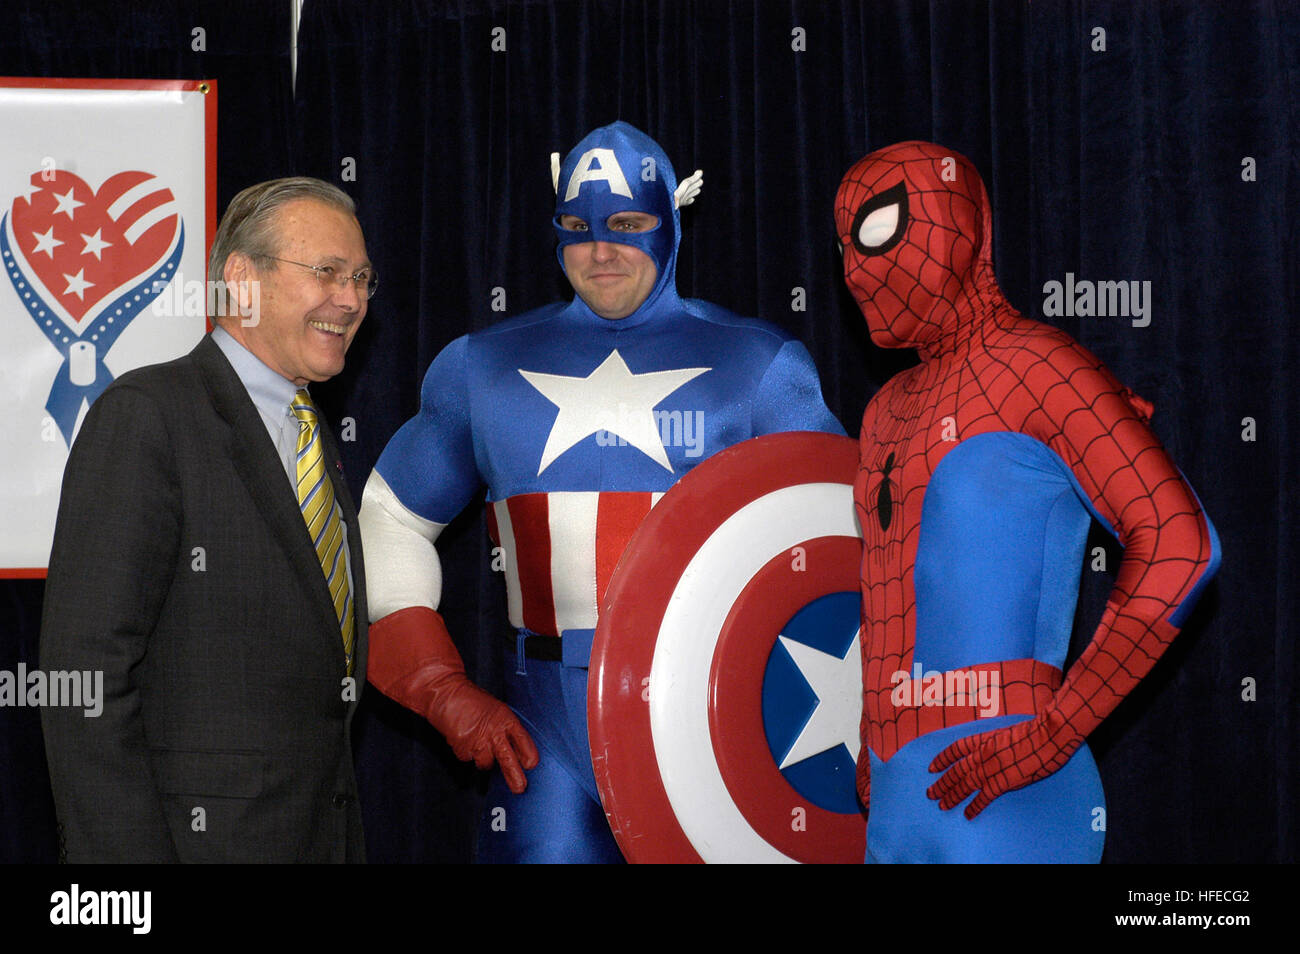 Spider man captain america fotografías e imágenes de alta resolución - Alamy